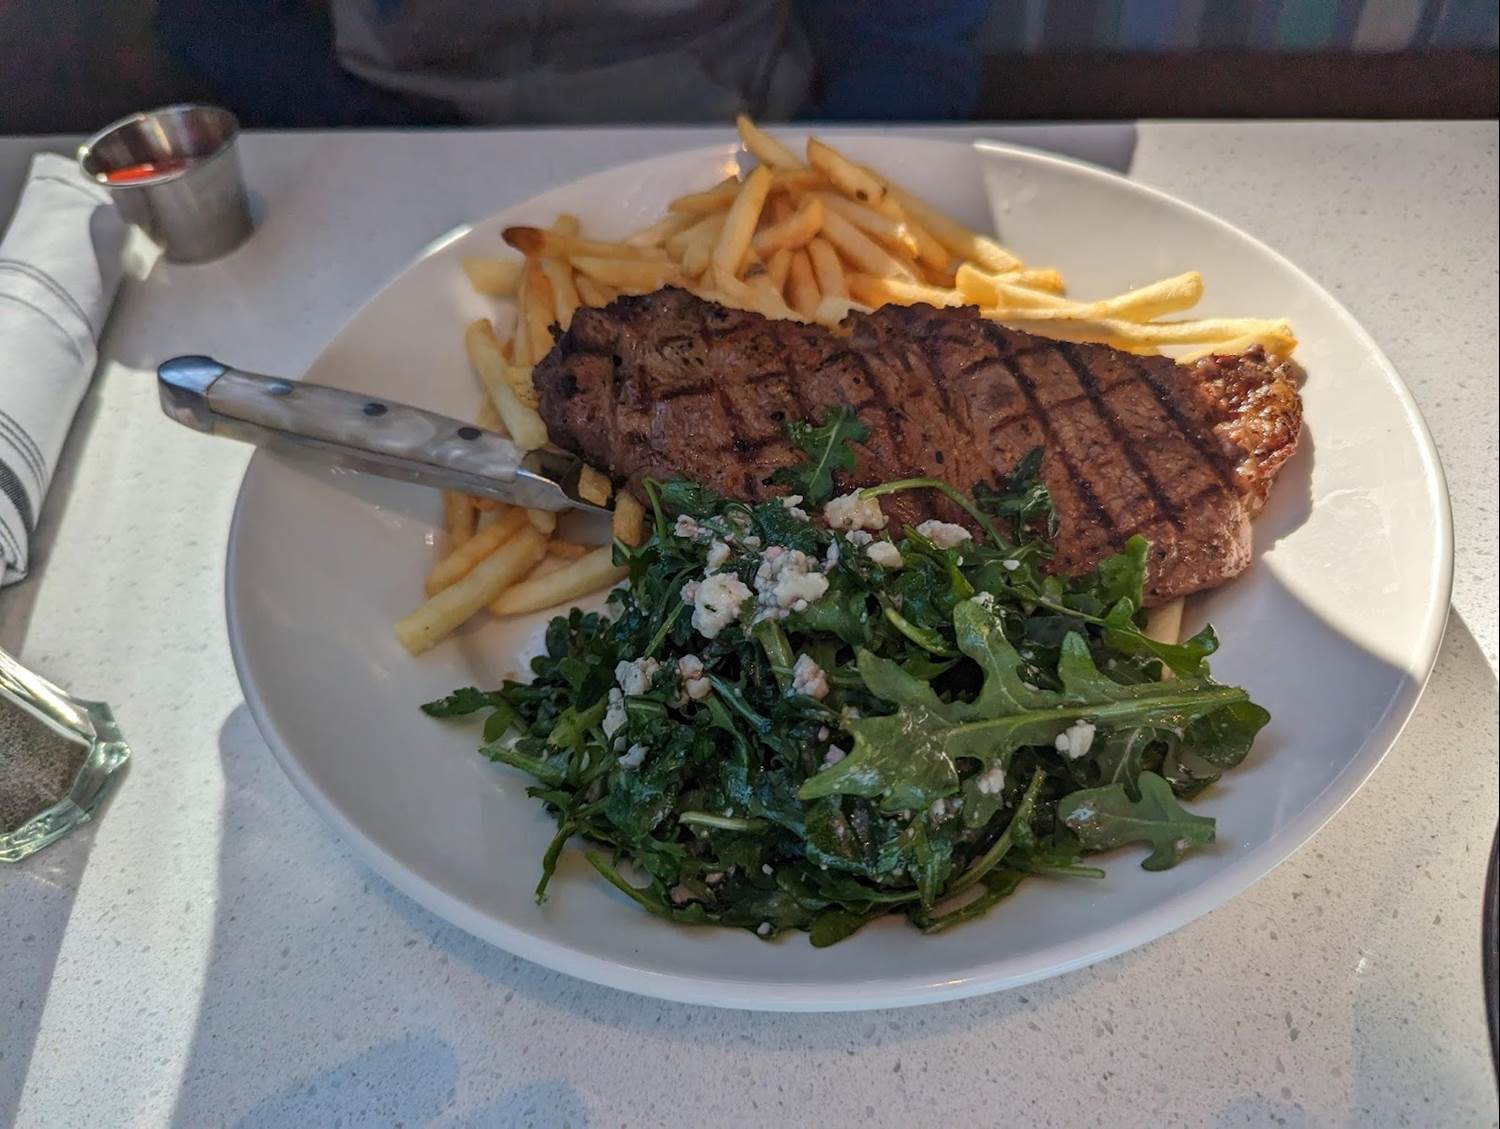 Our teenage son devoured his 10 oz steak even though it wasn’t favorite cut. 